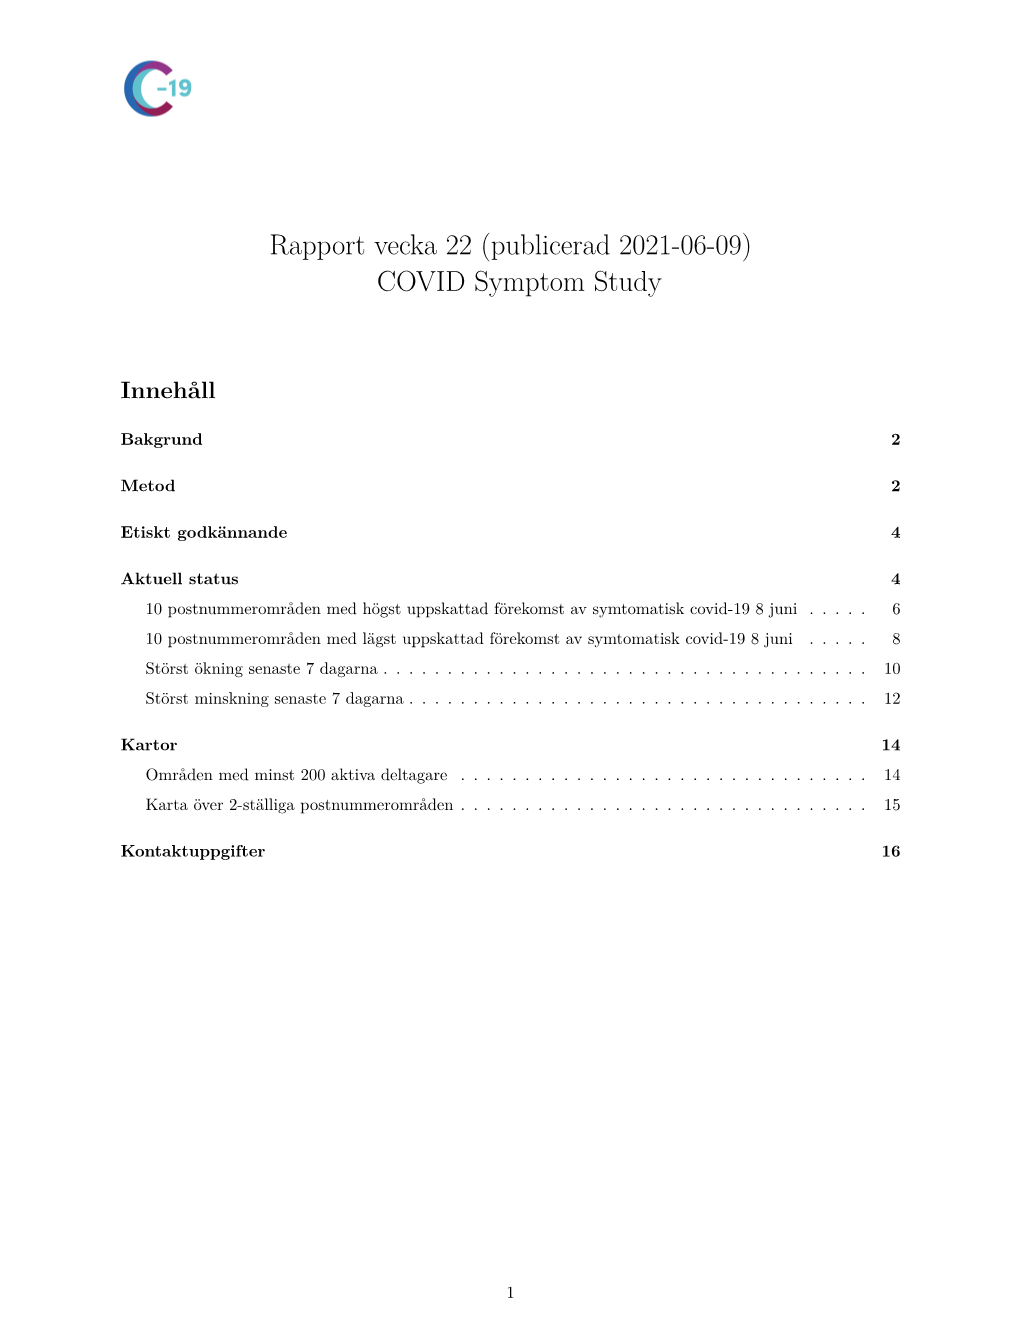 Rapport Vecka 22 (Publicerad 2021-06-09) COVID Symptom Study